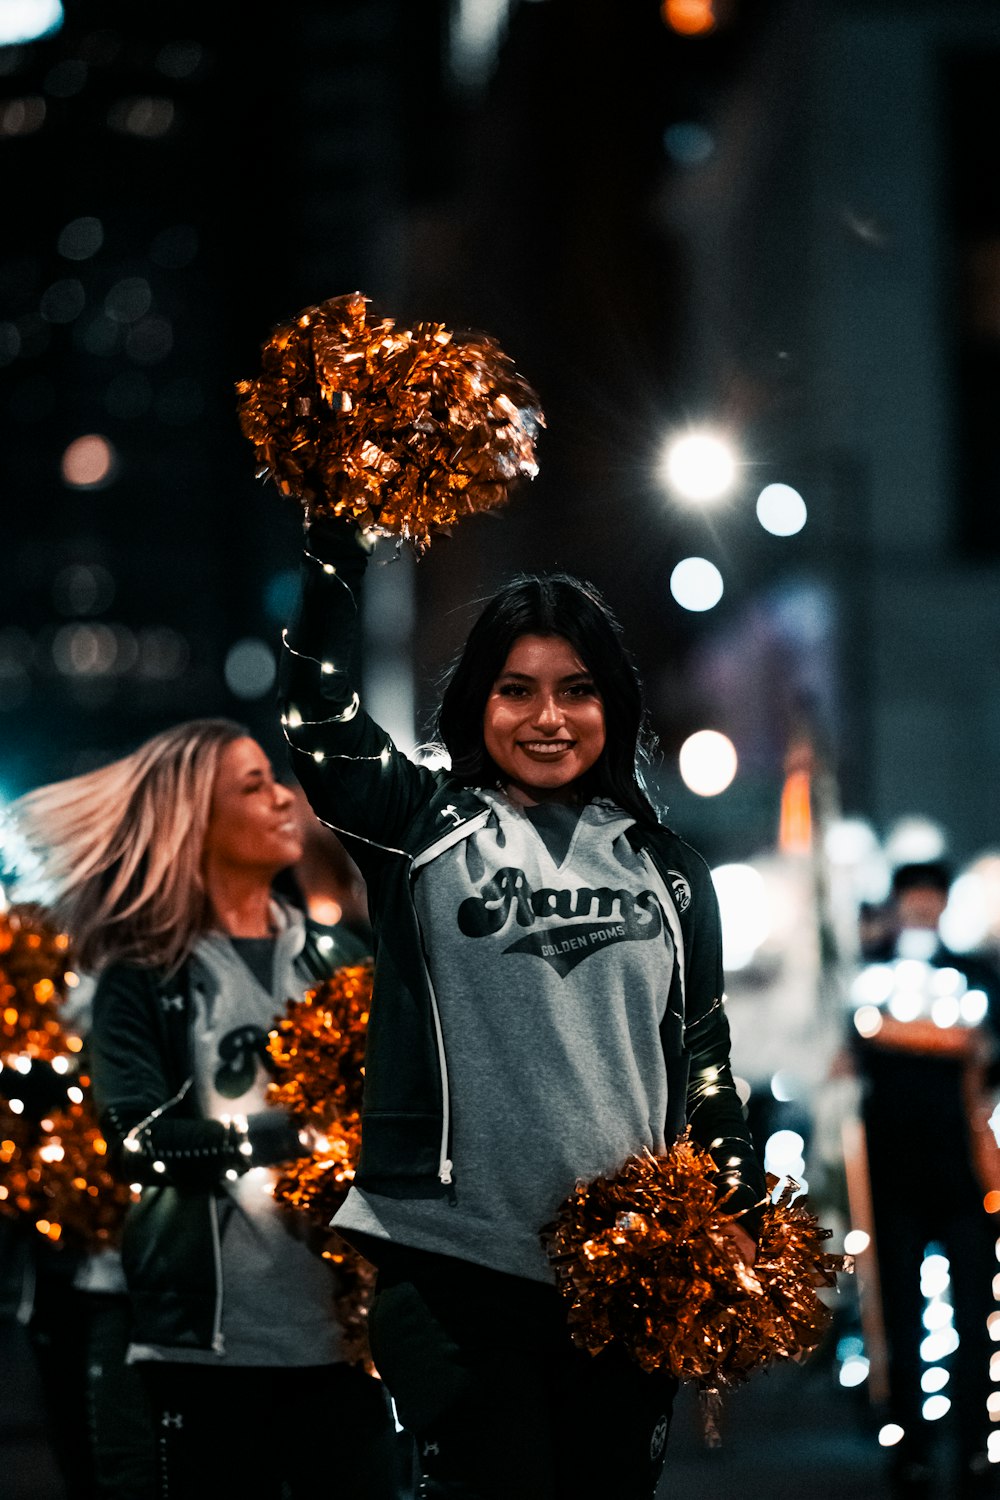 two cheerleaders walking down the street at night